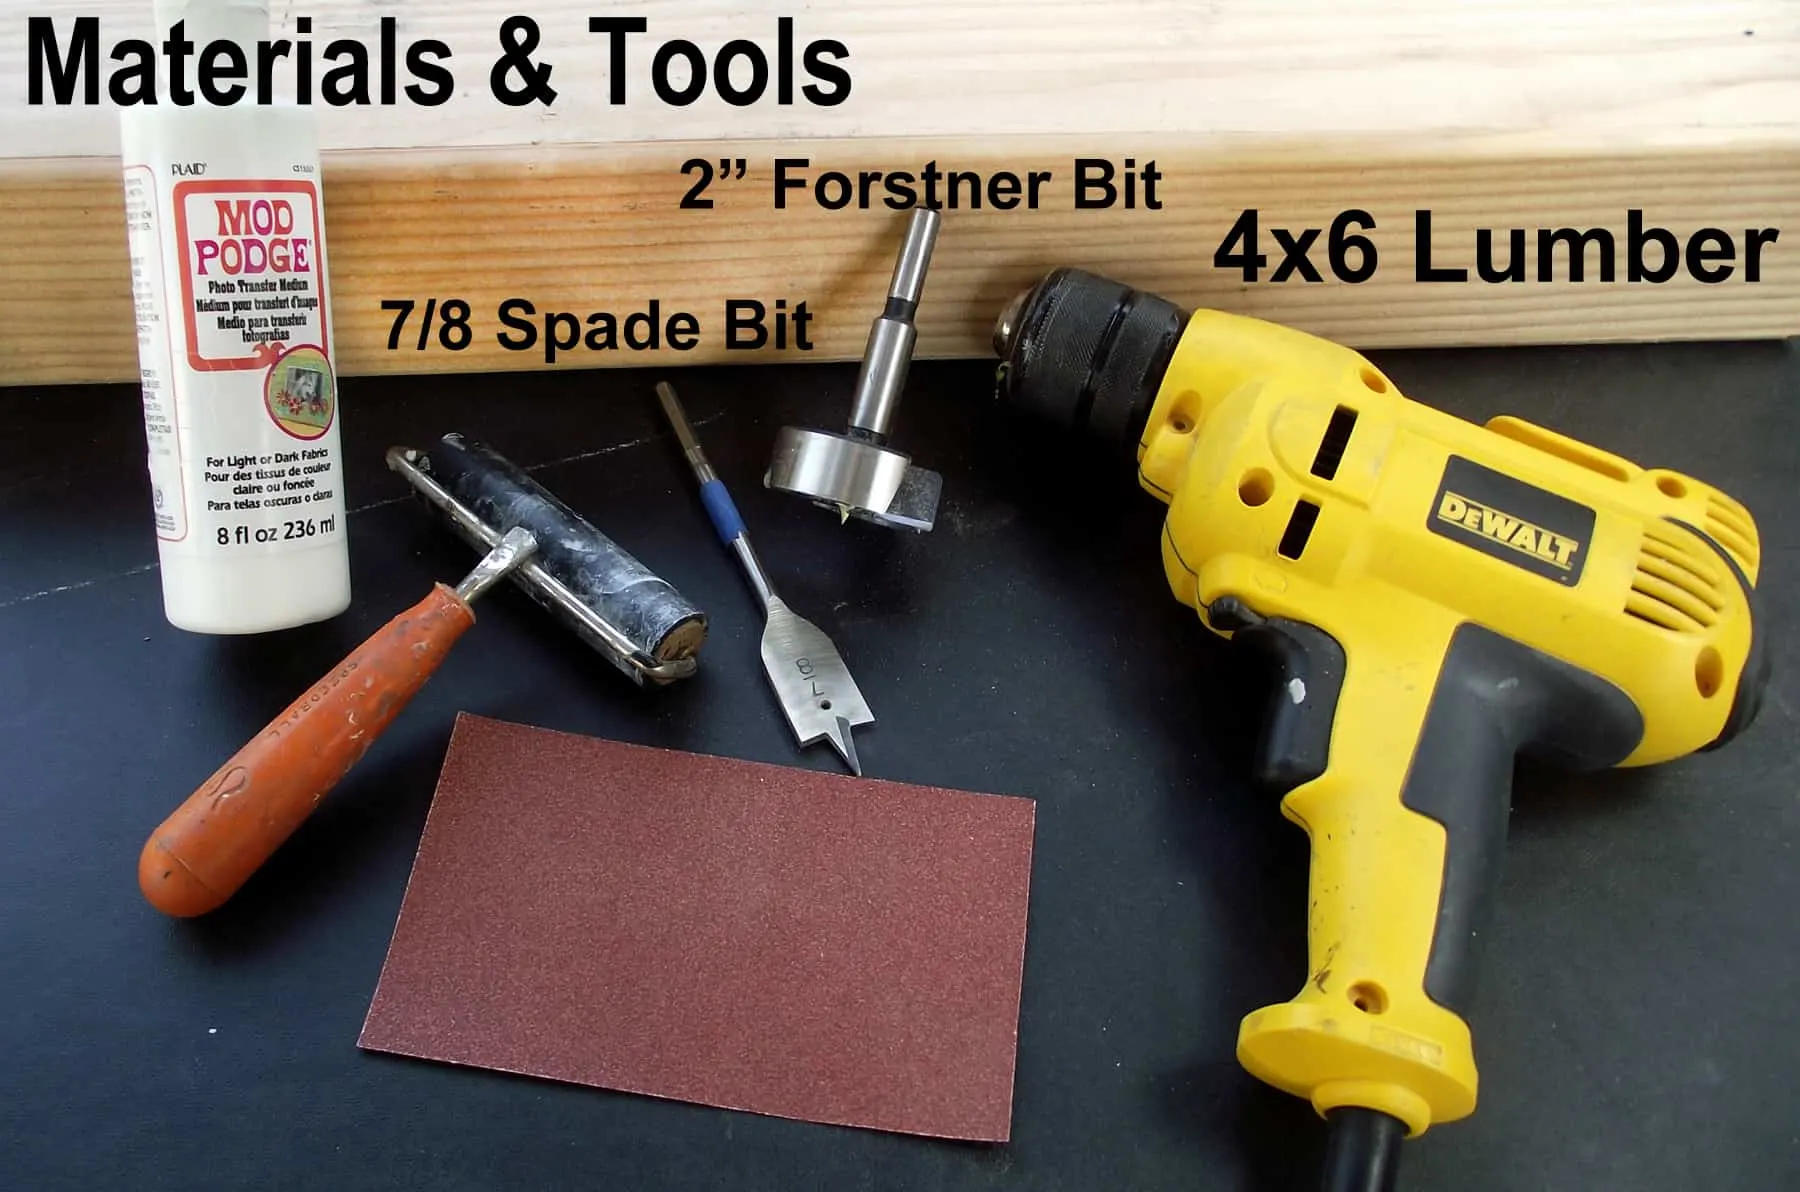 Mod Podge photo transfer medium, brayer, sandpaper, lumber, drill bits, and DeWalt drill